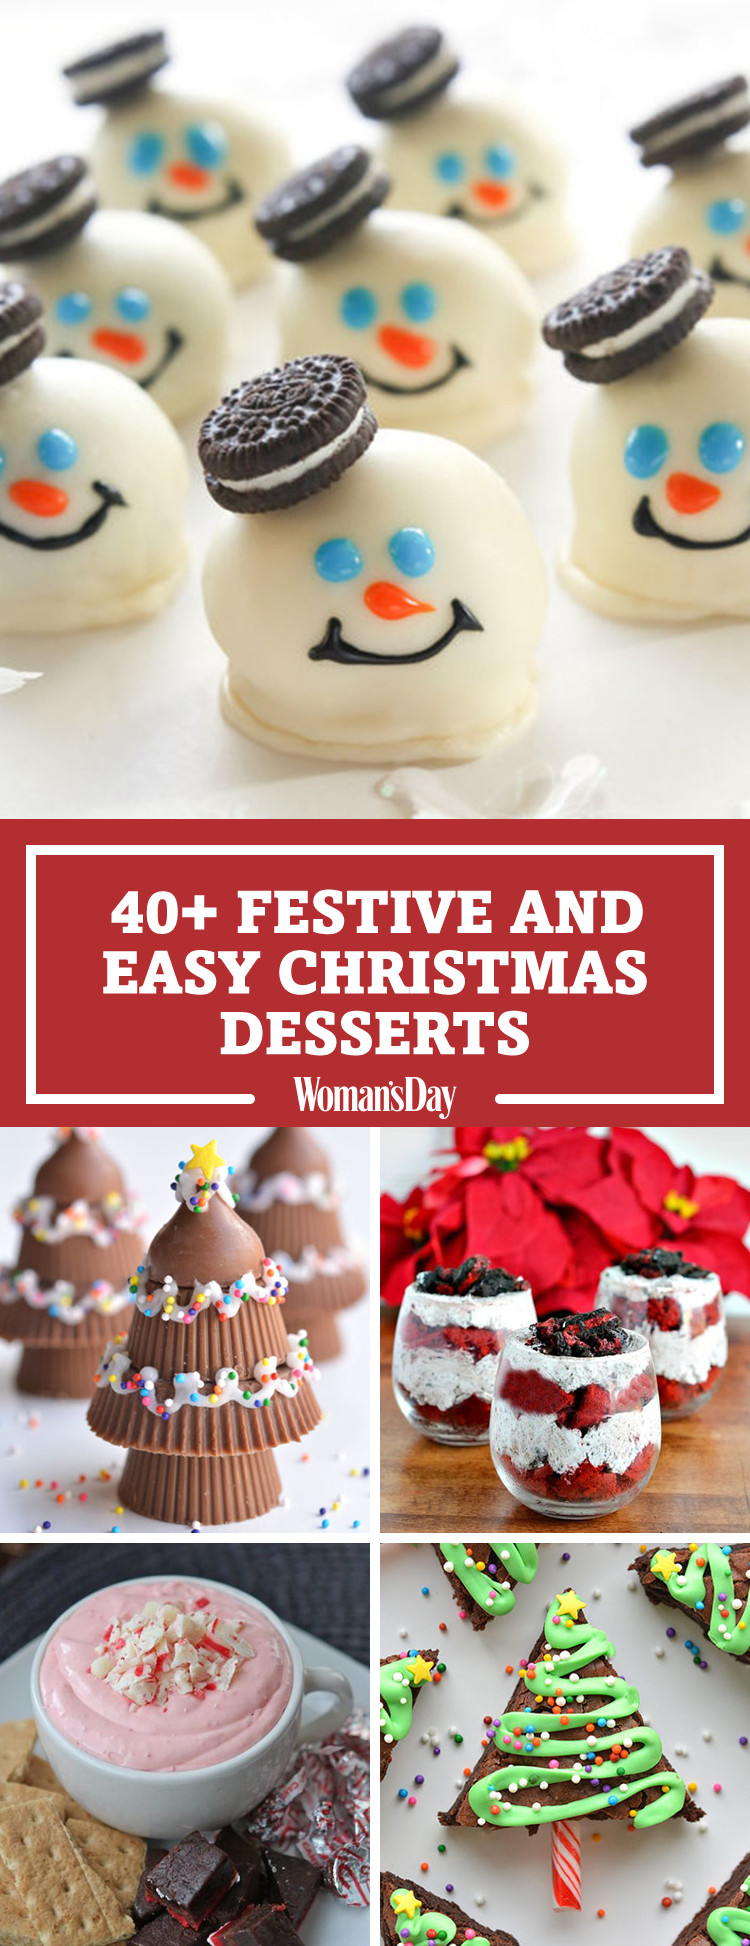 Quick Christmas Desserts
 57 Easy Christmas Dessert Recipes Best Ideas for Fun